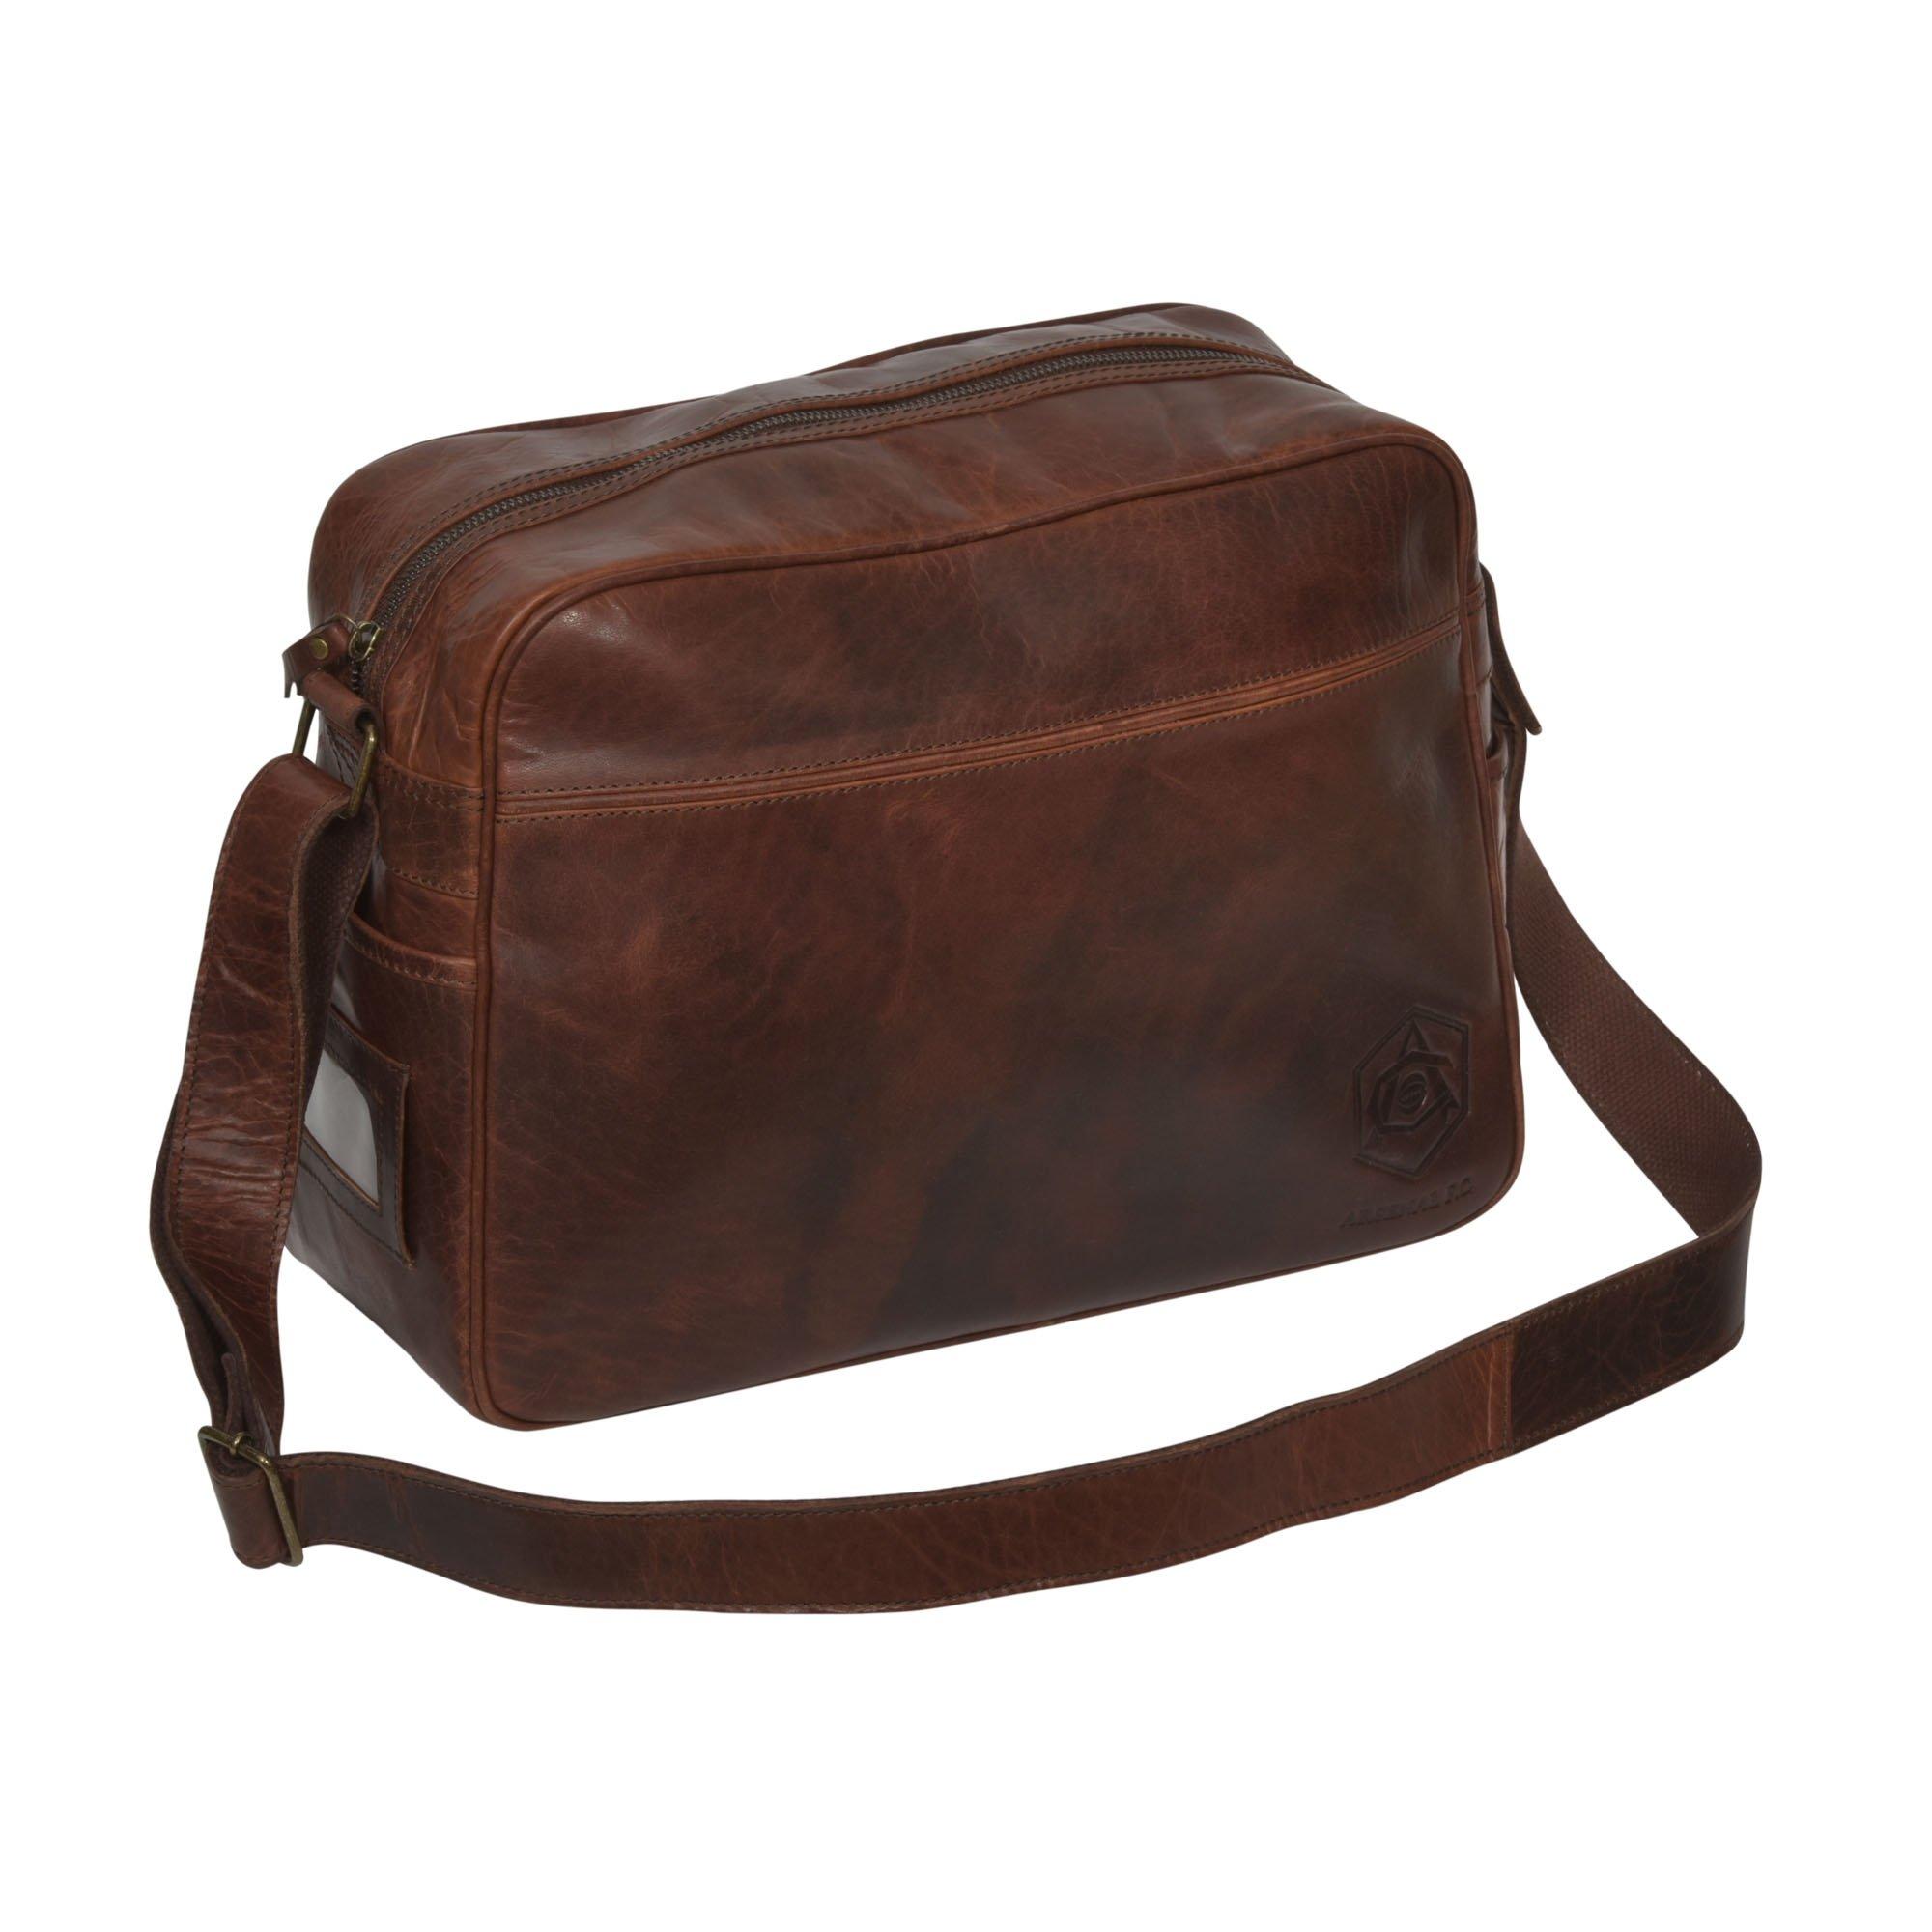 puma leather messenger bag